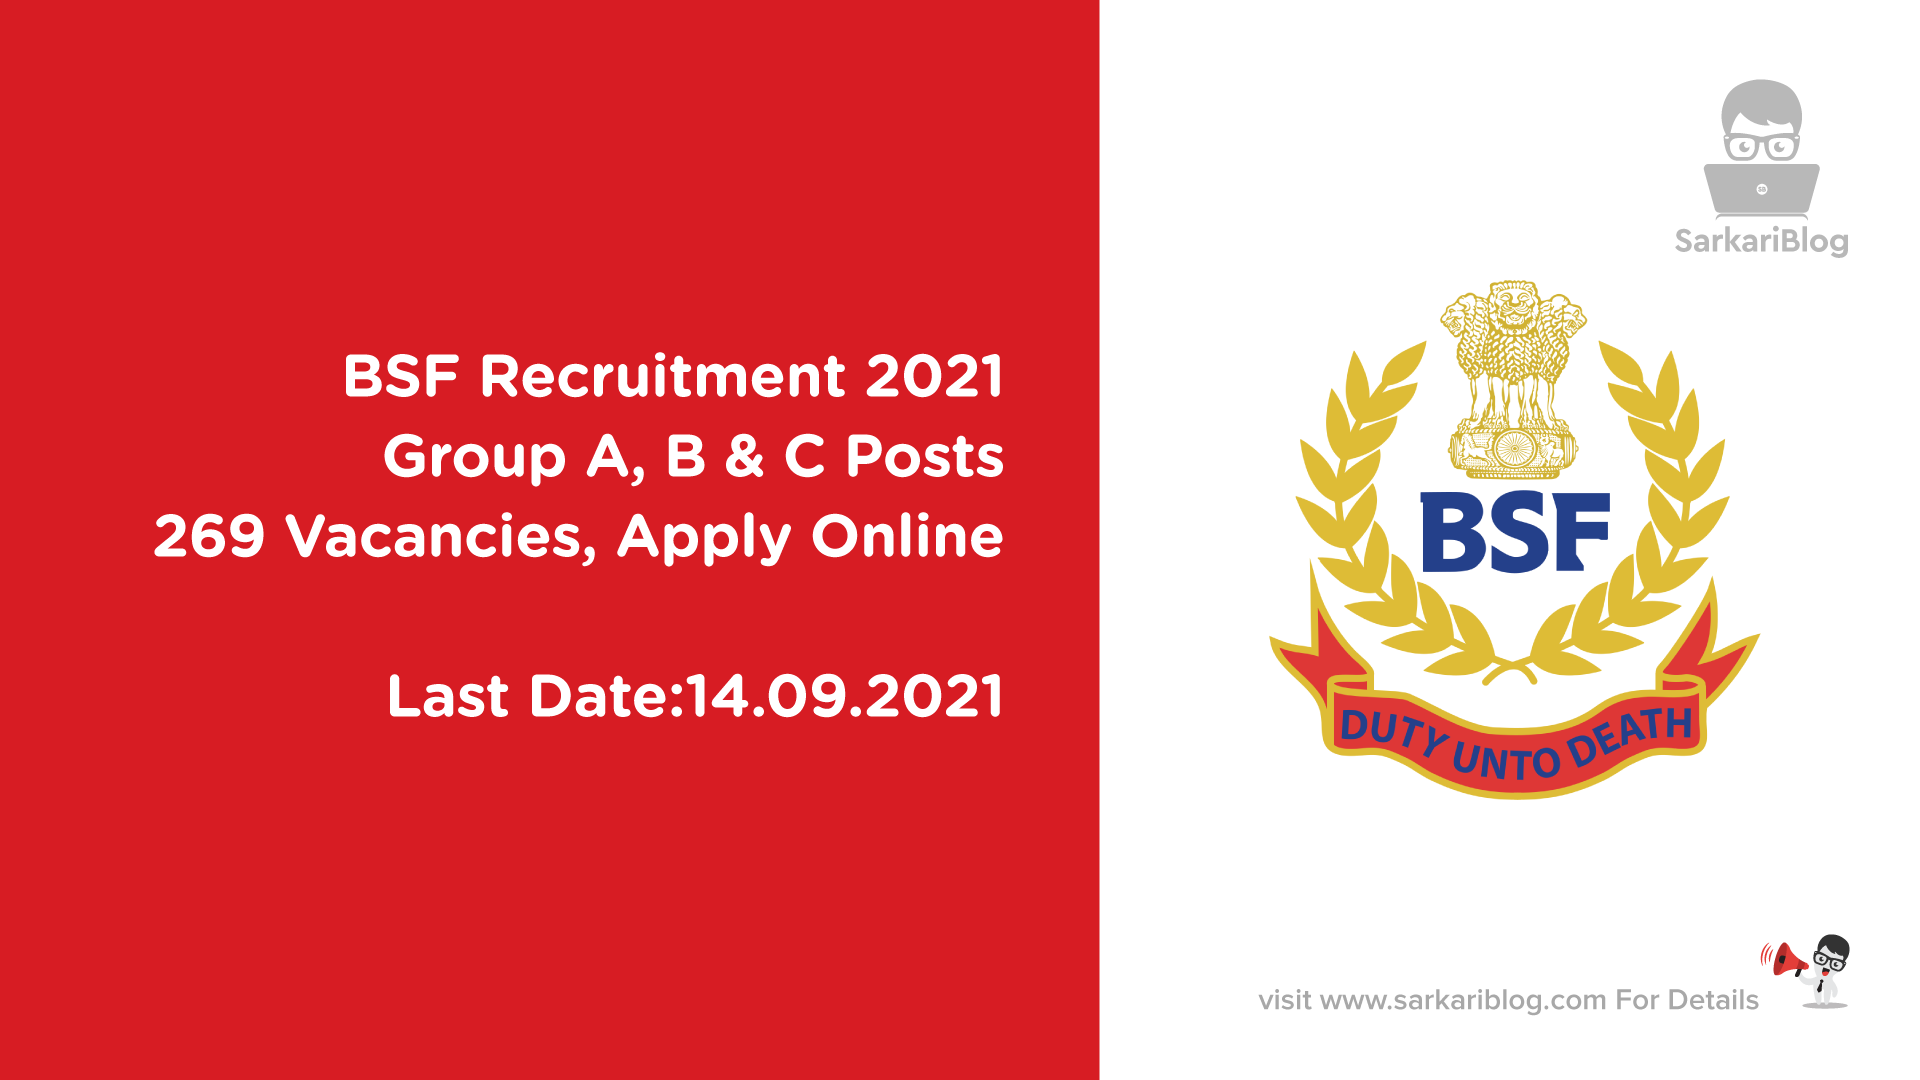 BSF Recruitment 2021, Group A, B & C Posts